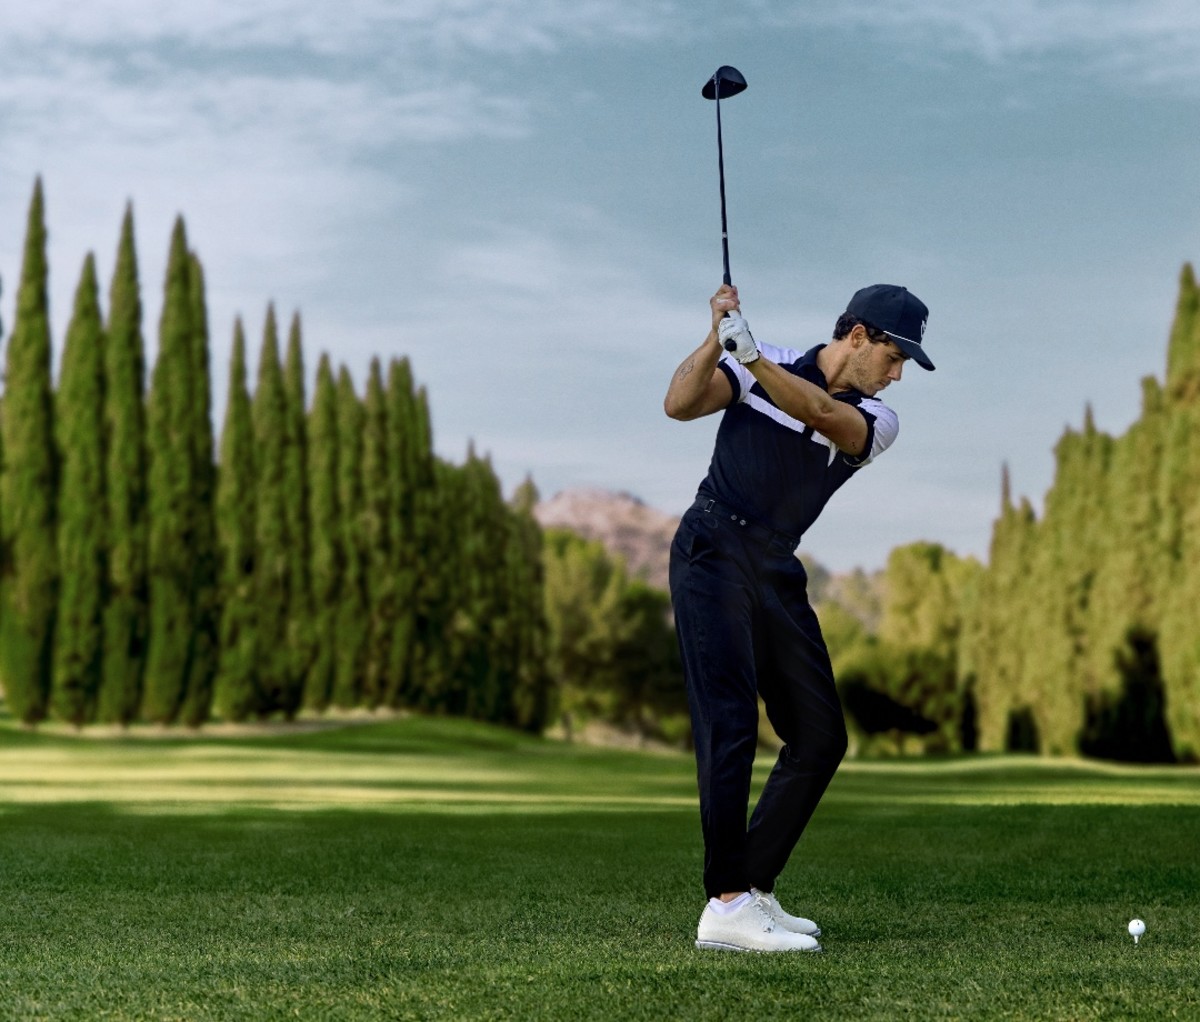 Actor Nick Jonas swinging golf club on course